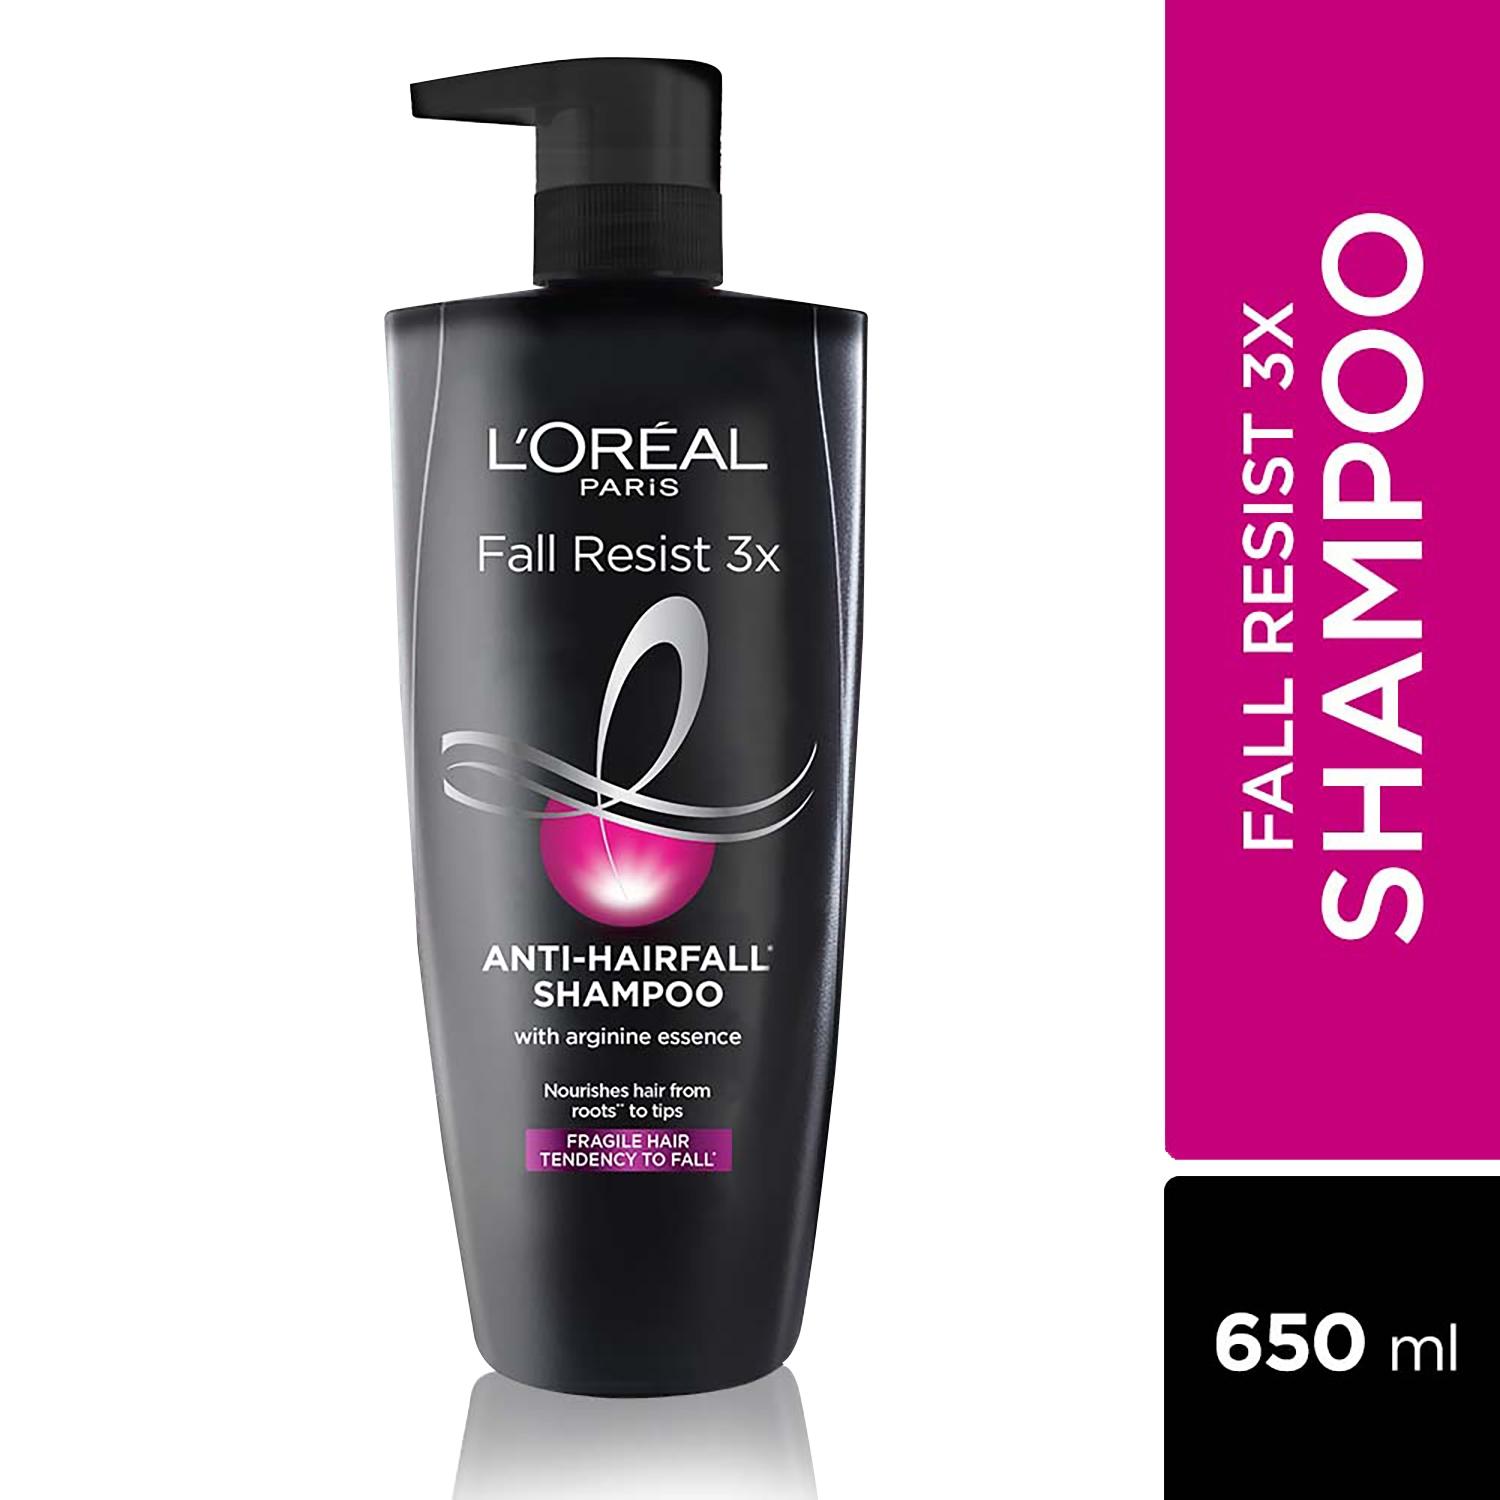 l'oreal paris fall resist 3x anti-hairfall shampoo (650ml)